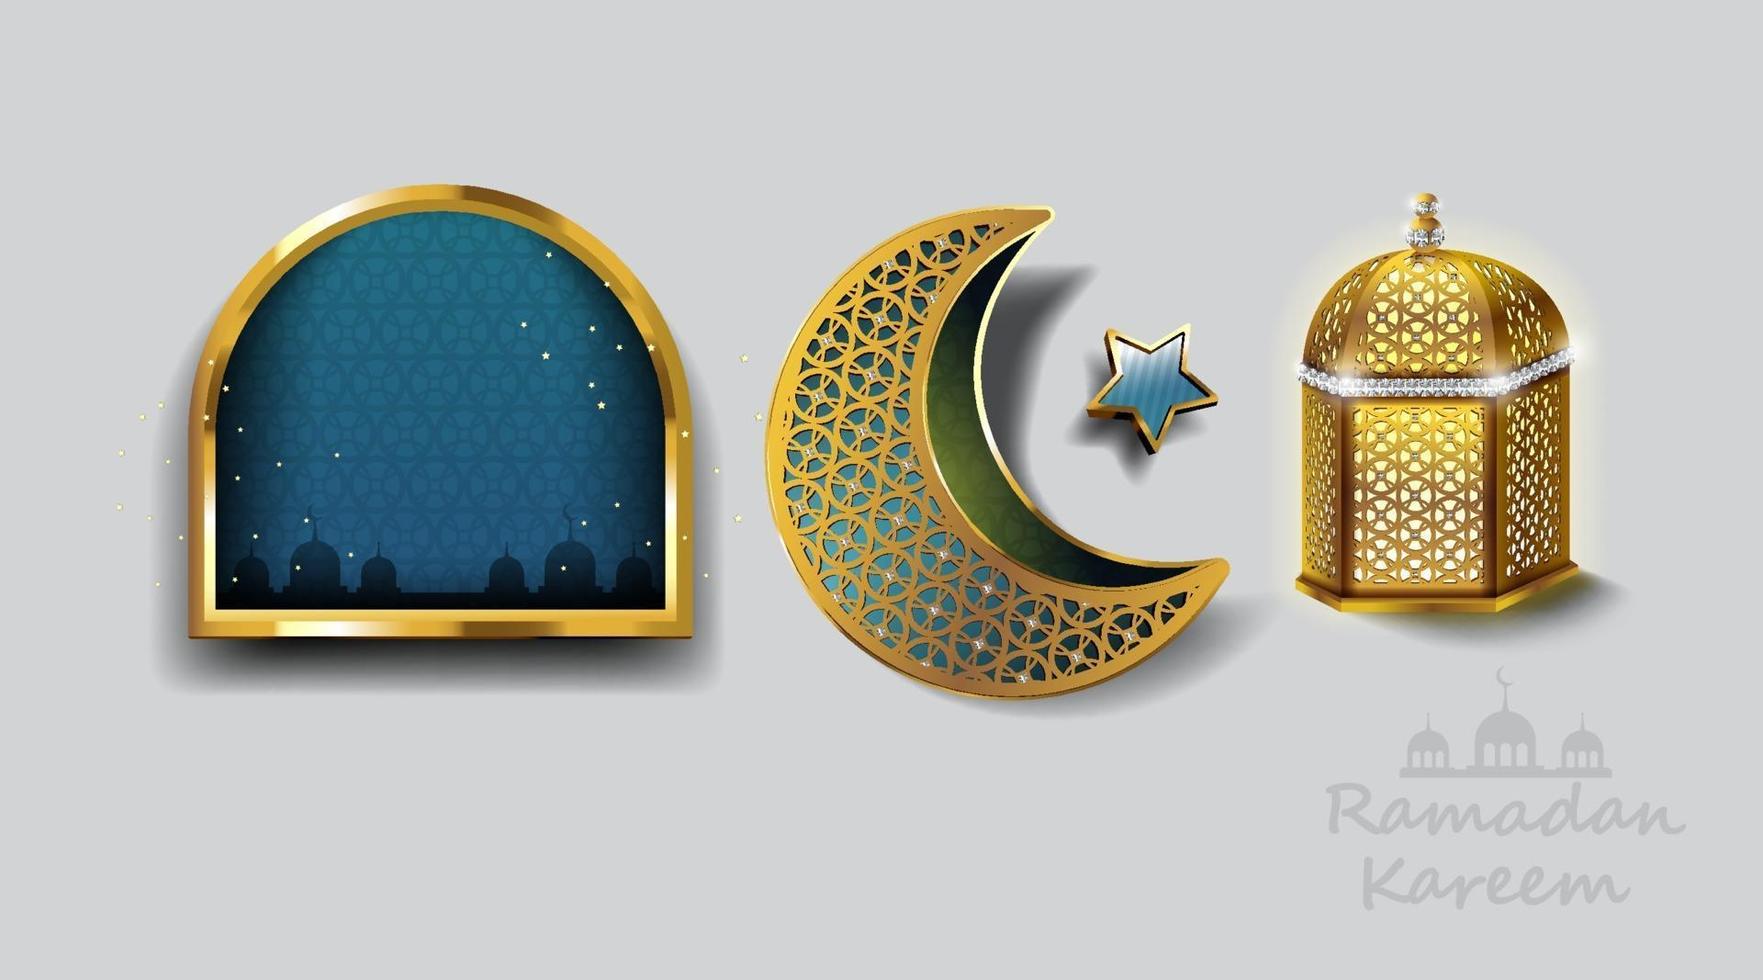 Ramadan Kareem Design mit goldener arabischer Lampe. Vektorillustration. vektor